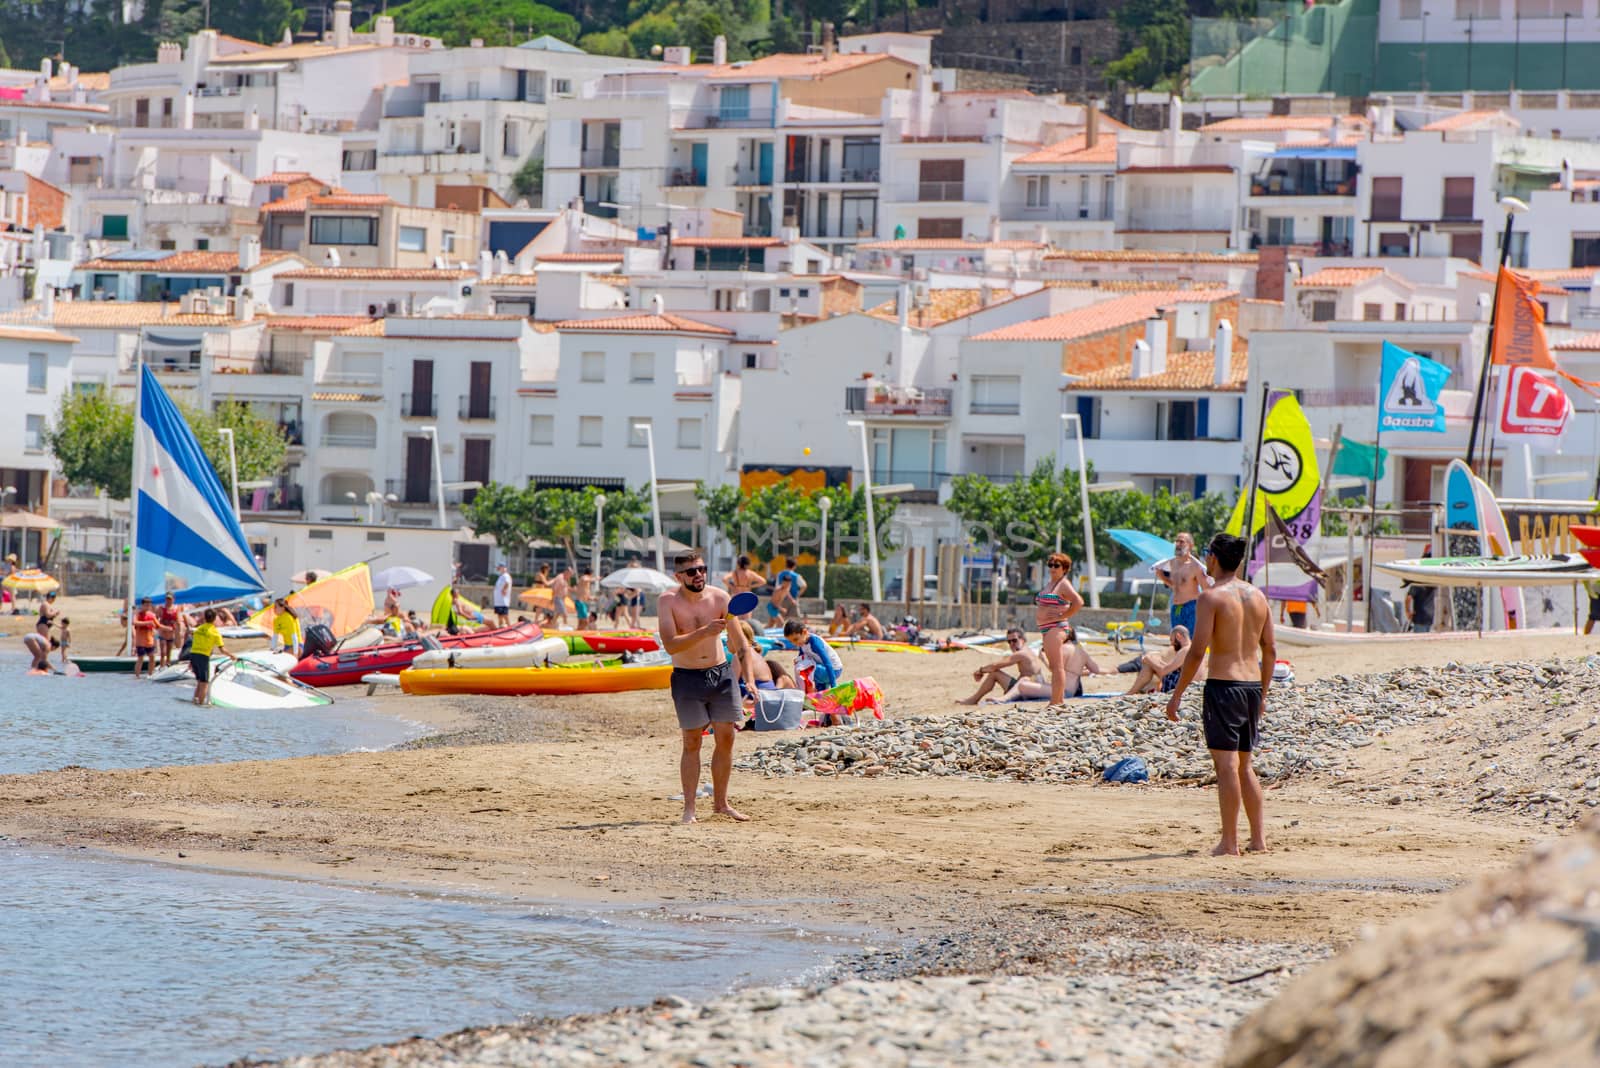 Port de la Selva, Spain : 9 July 2020 : People in the beach of Port de la Selva, one of the most touristic villages of Costa Brava, on August 9, 2013, in Port de la Selva, Catalonia, Spain.